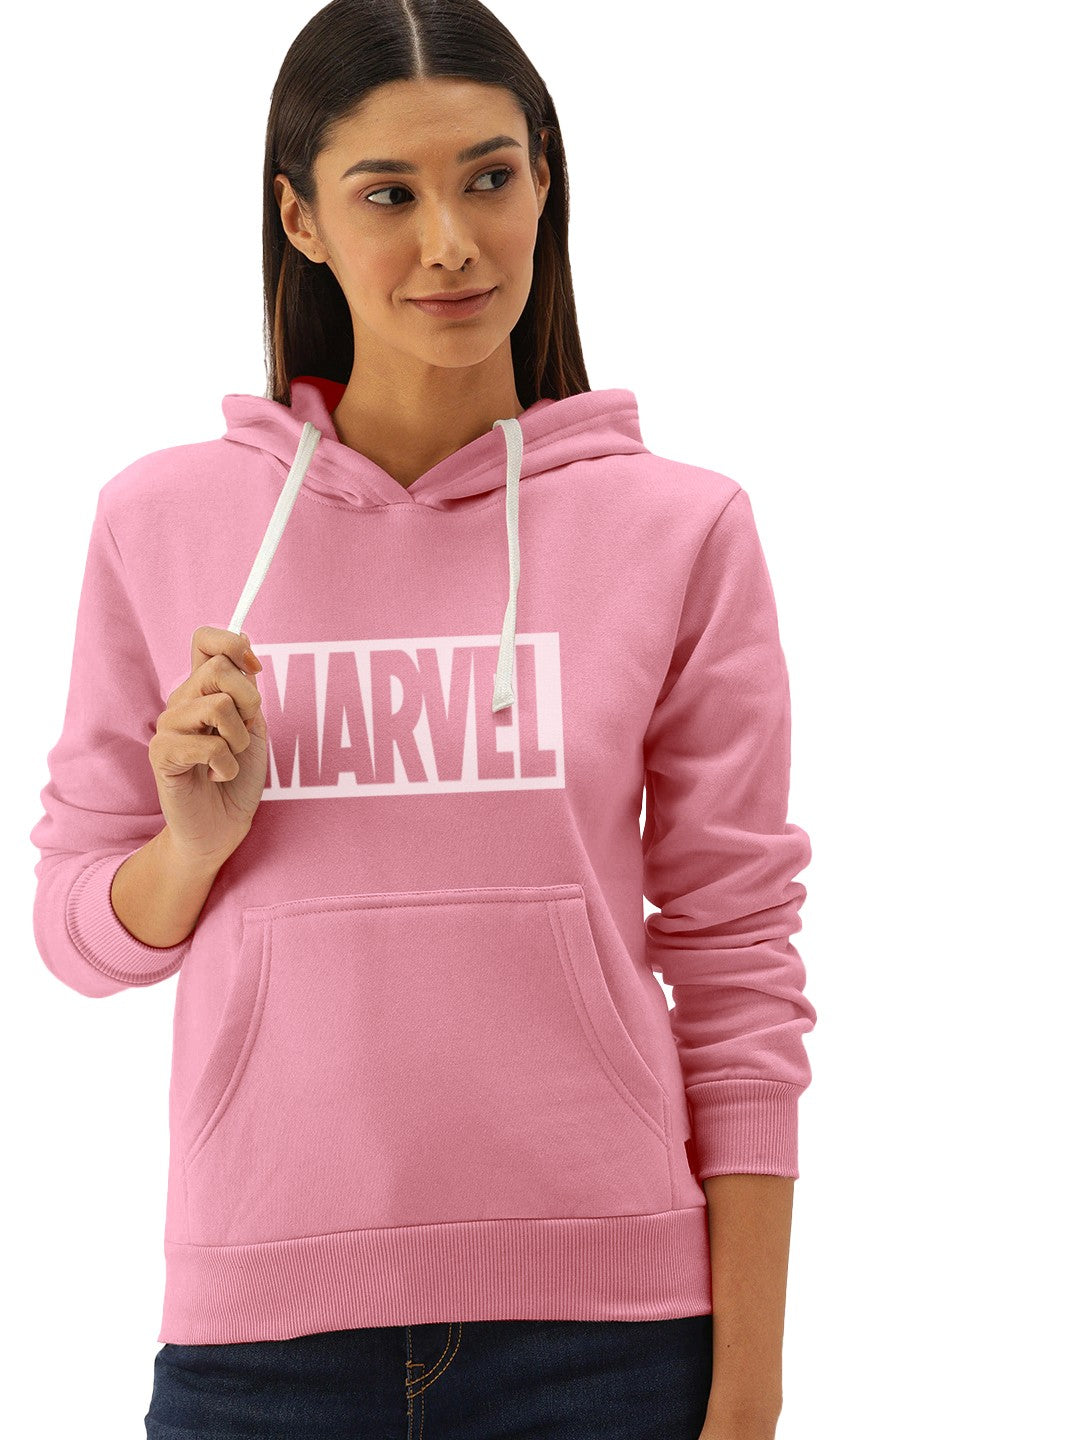 Marvel Printed Premium Quality Hoodie For Women